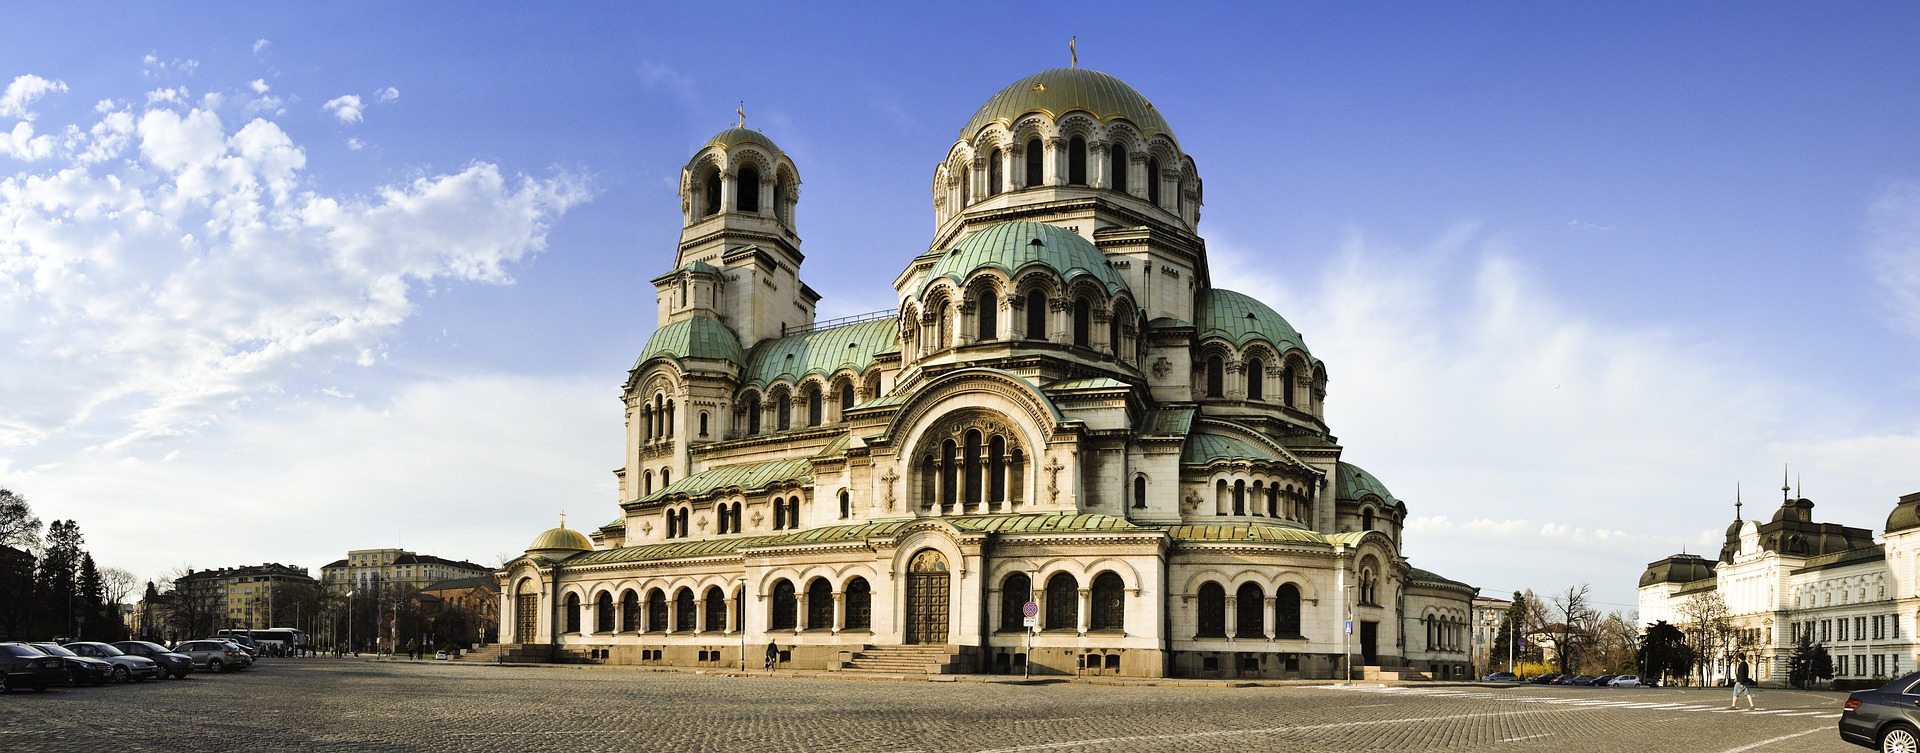 Imagen de la iglesia Alejandro Nevsky en Sofía (Bulgaria)